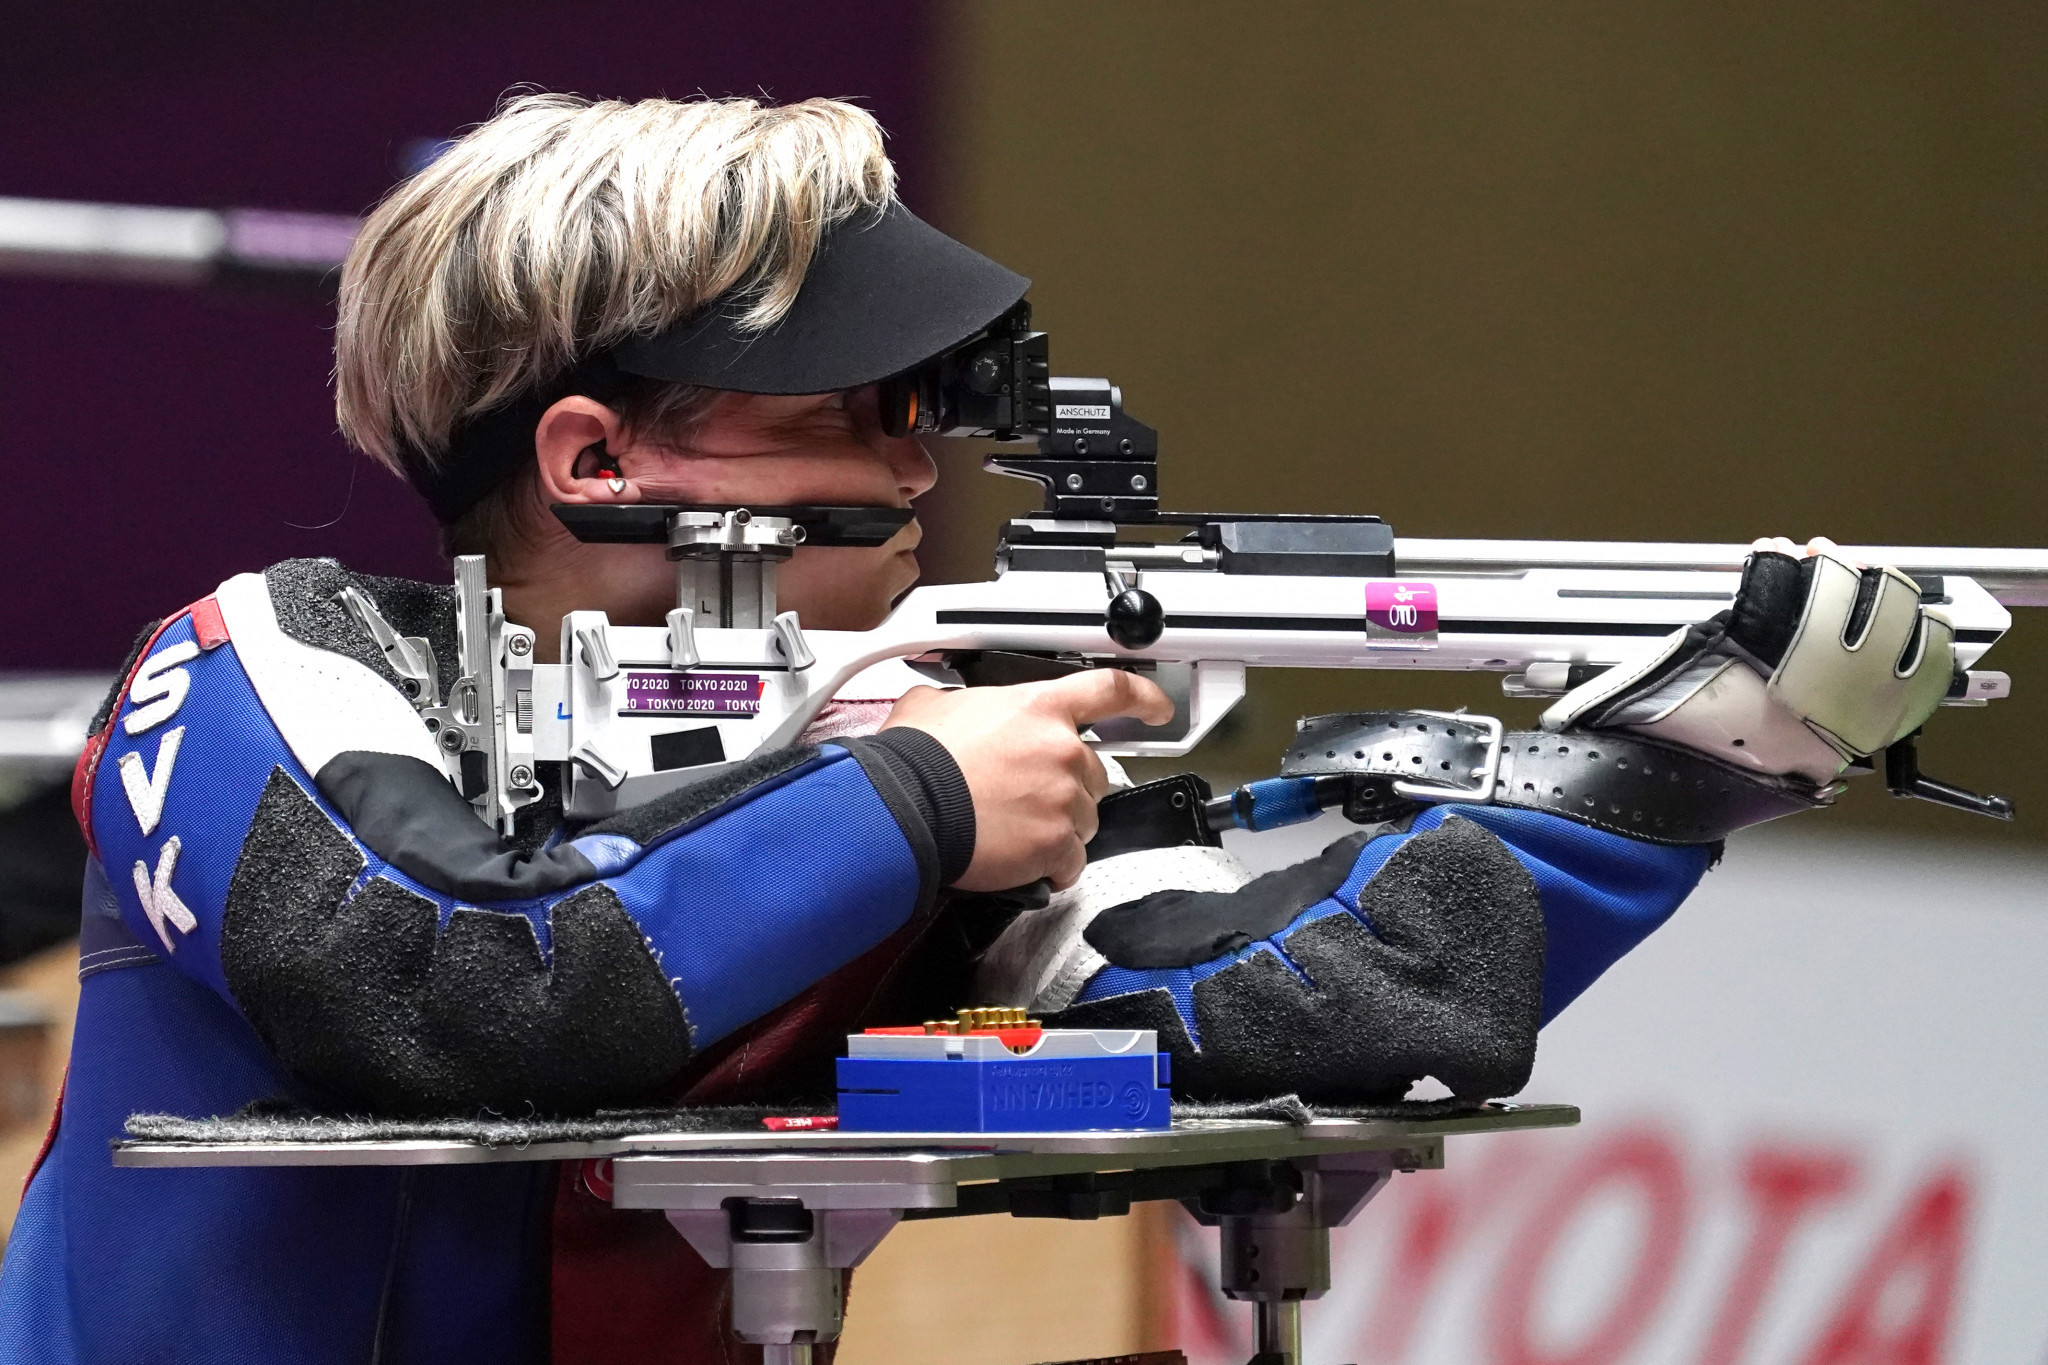 Veronika Vadovičová set a new world record at the Para Shooting World Championships ©Getty Images